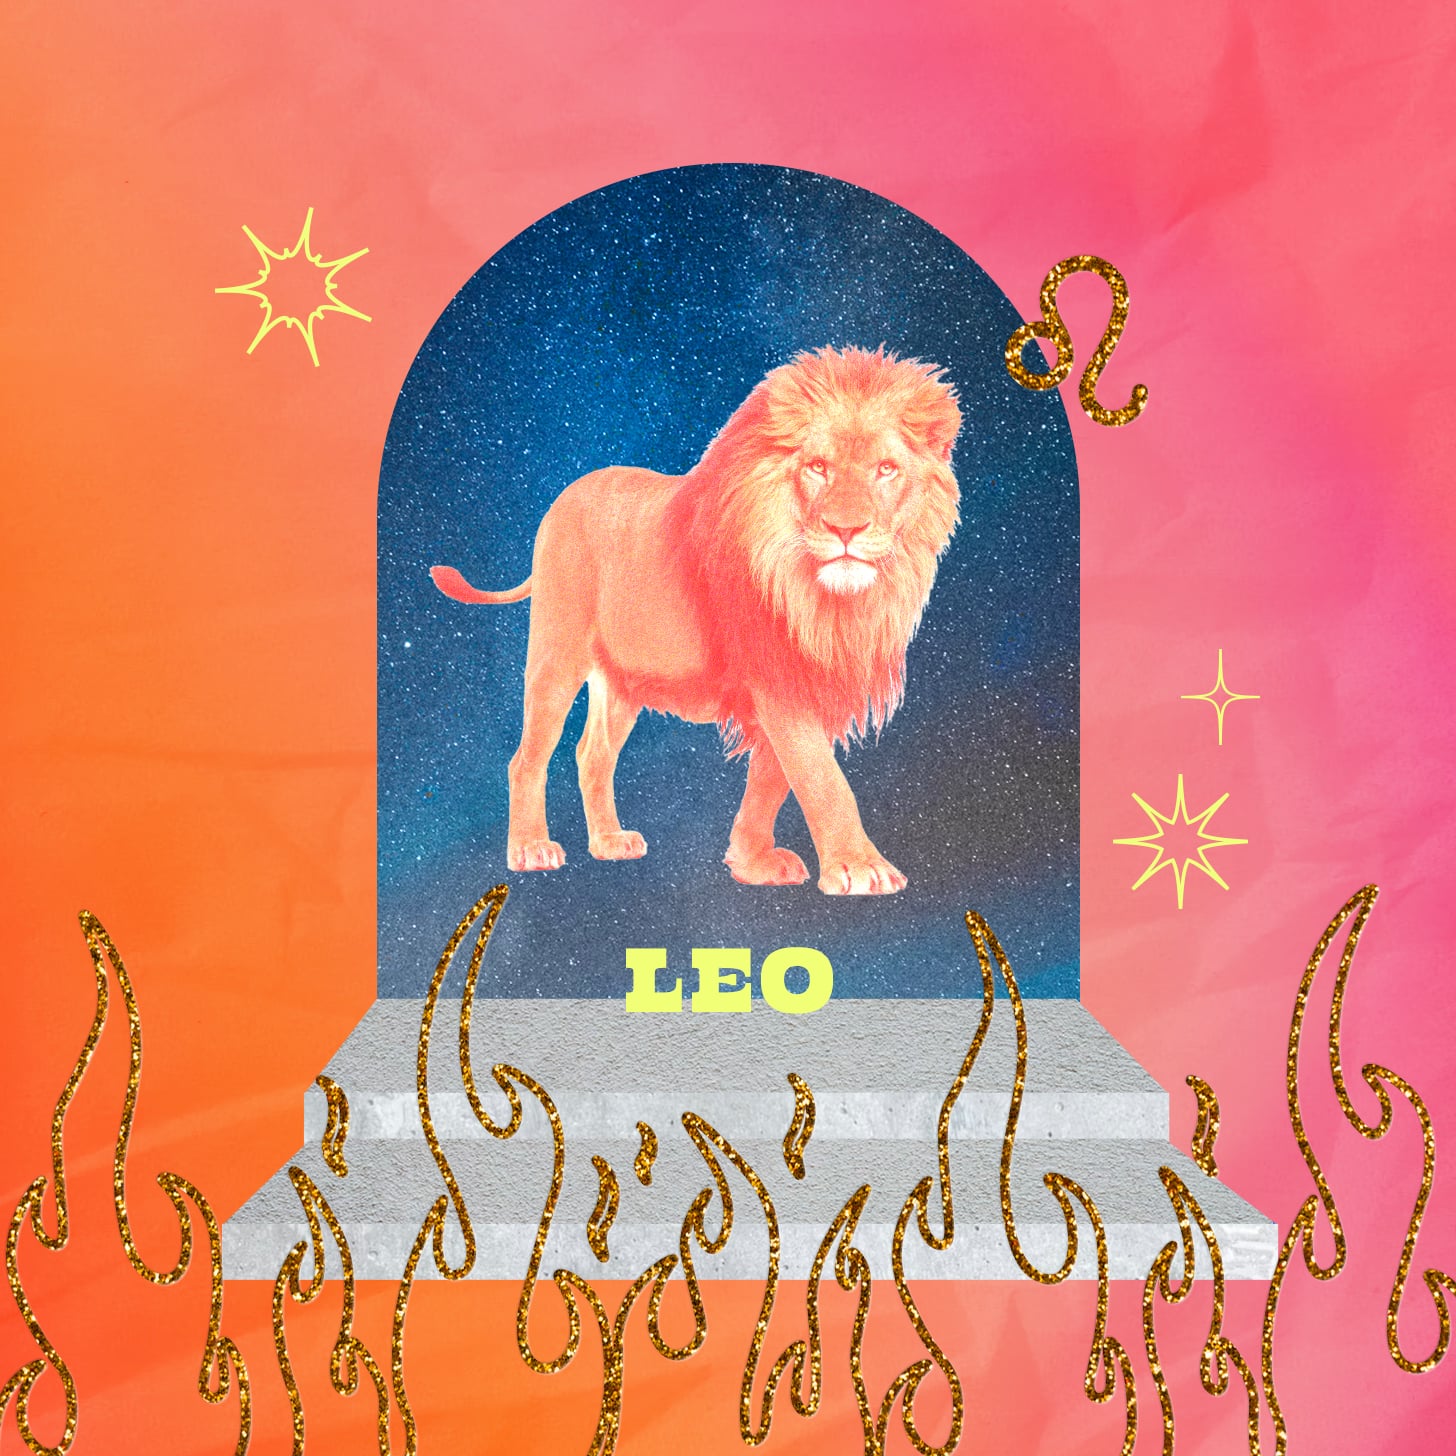 Leo weekly horoscope for July 17, 2022